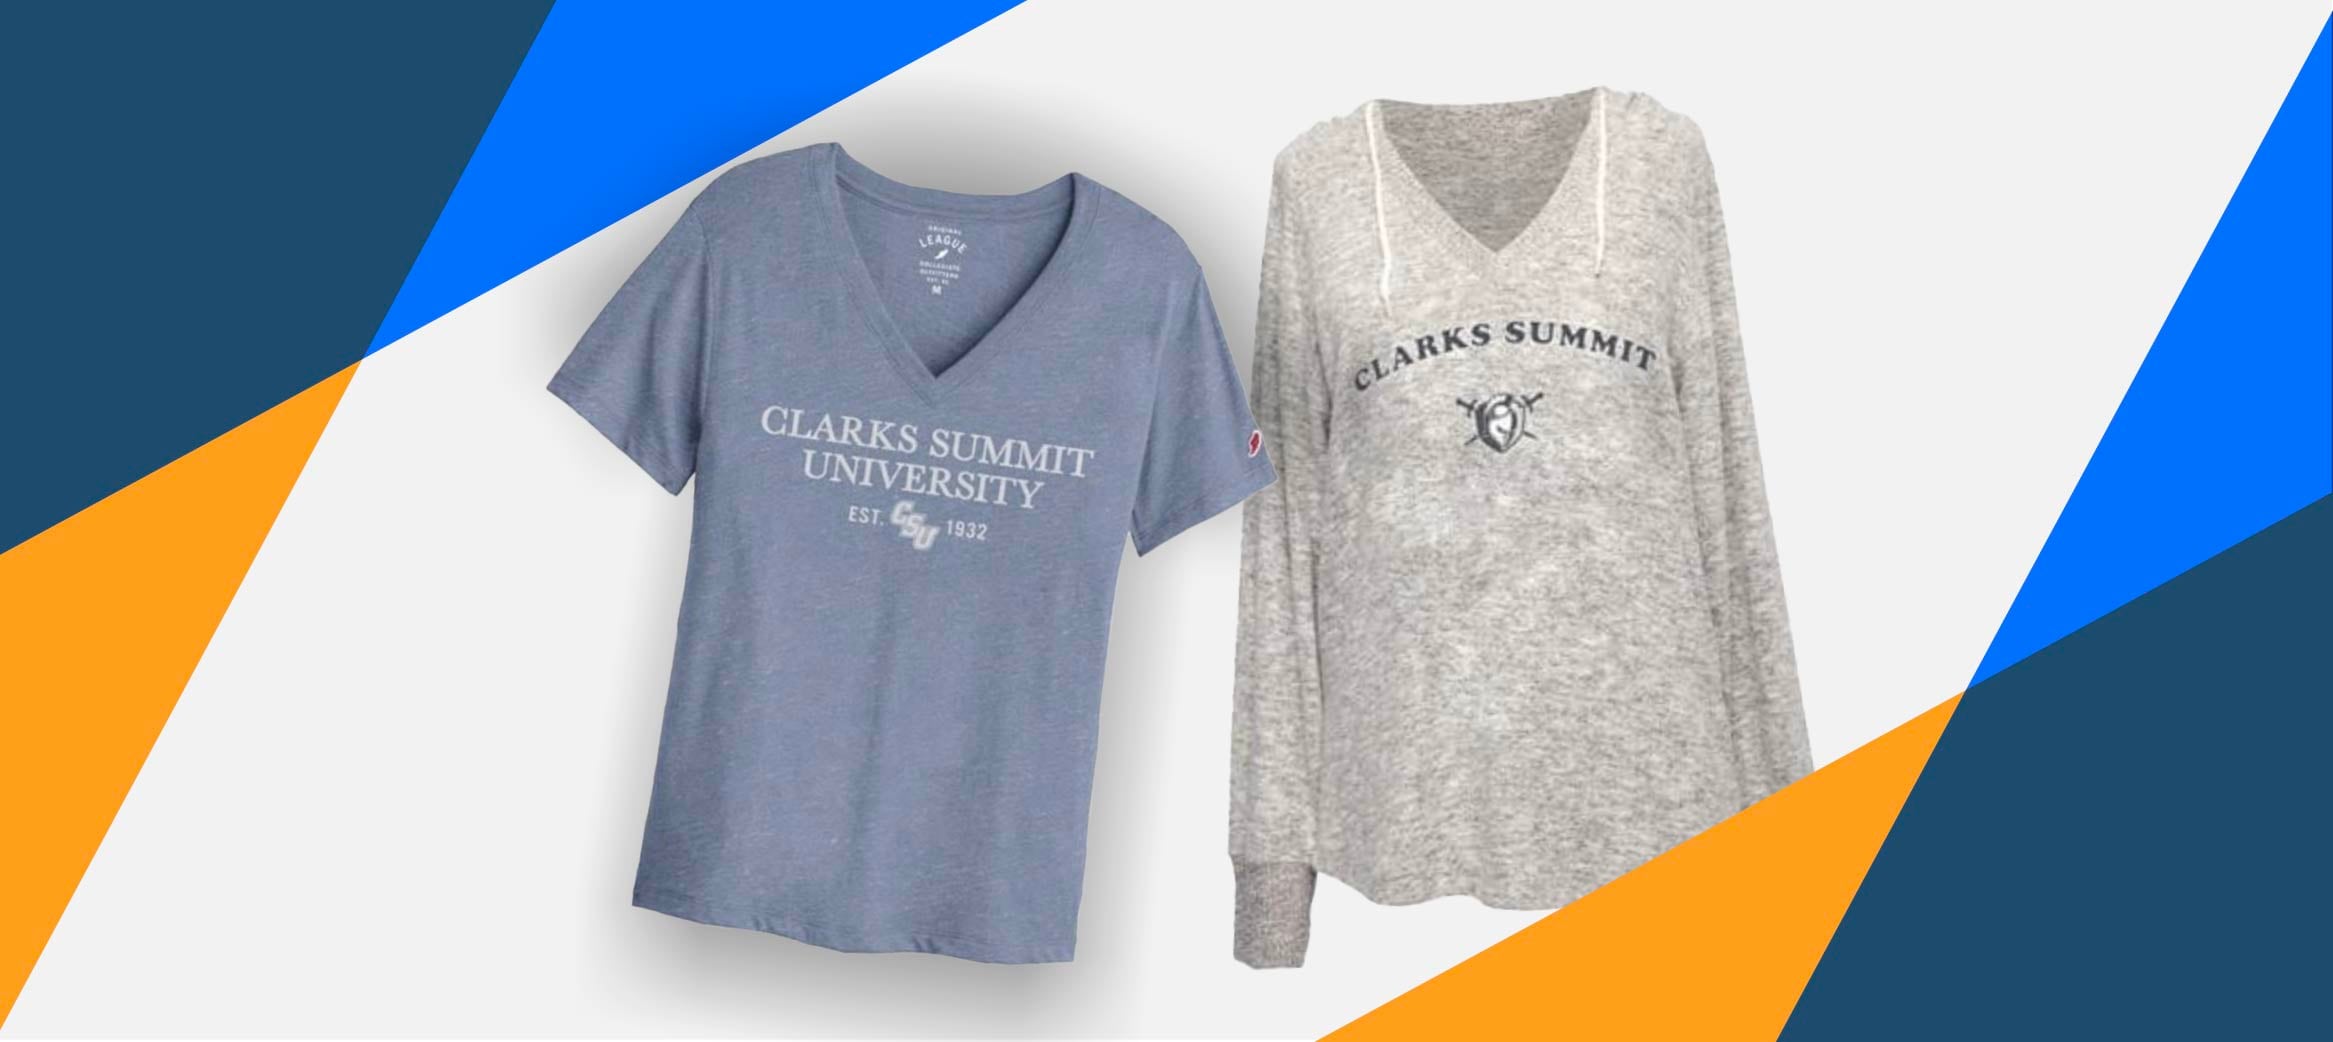 Blue Clarks Summit T-Shirt and Grey long sleeve Clarks Summit shirt